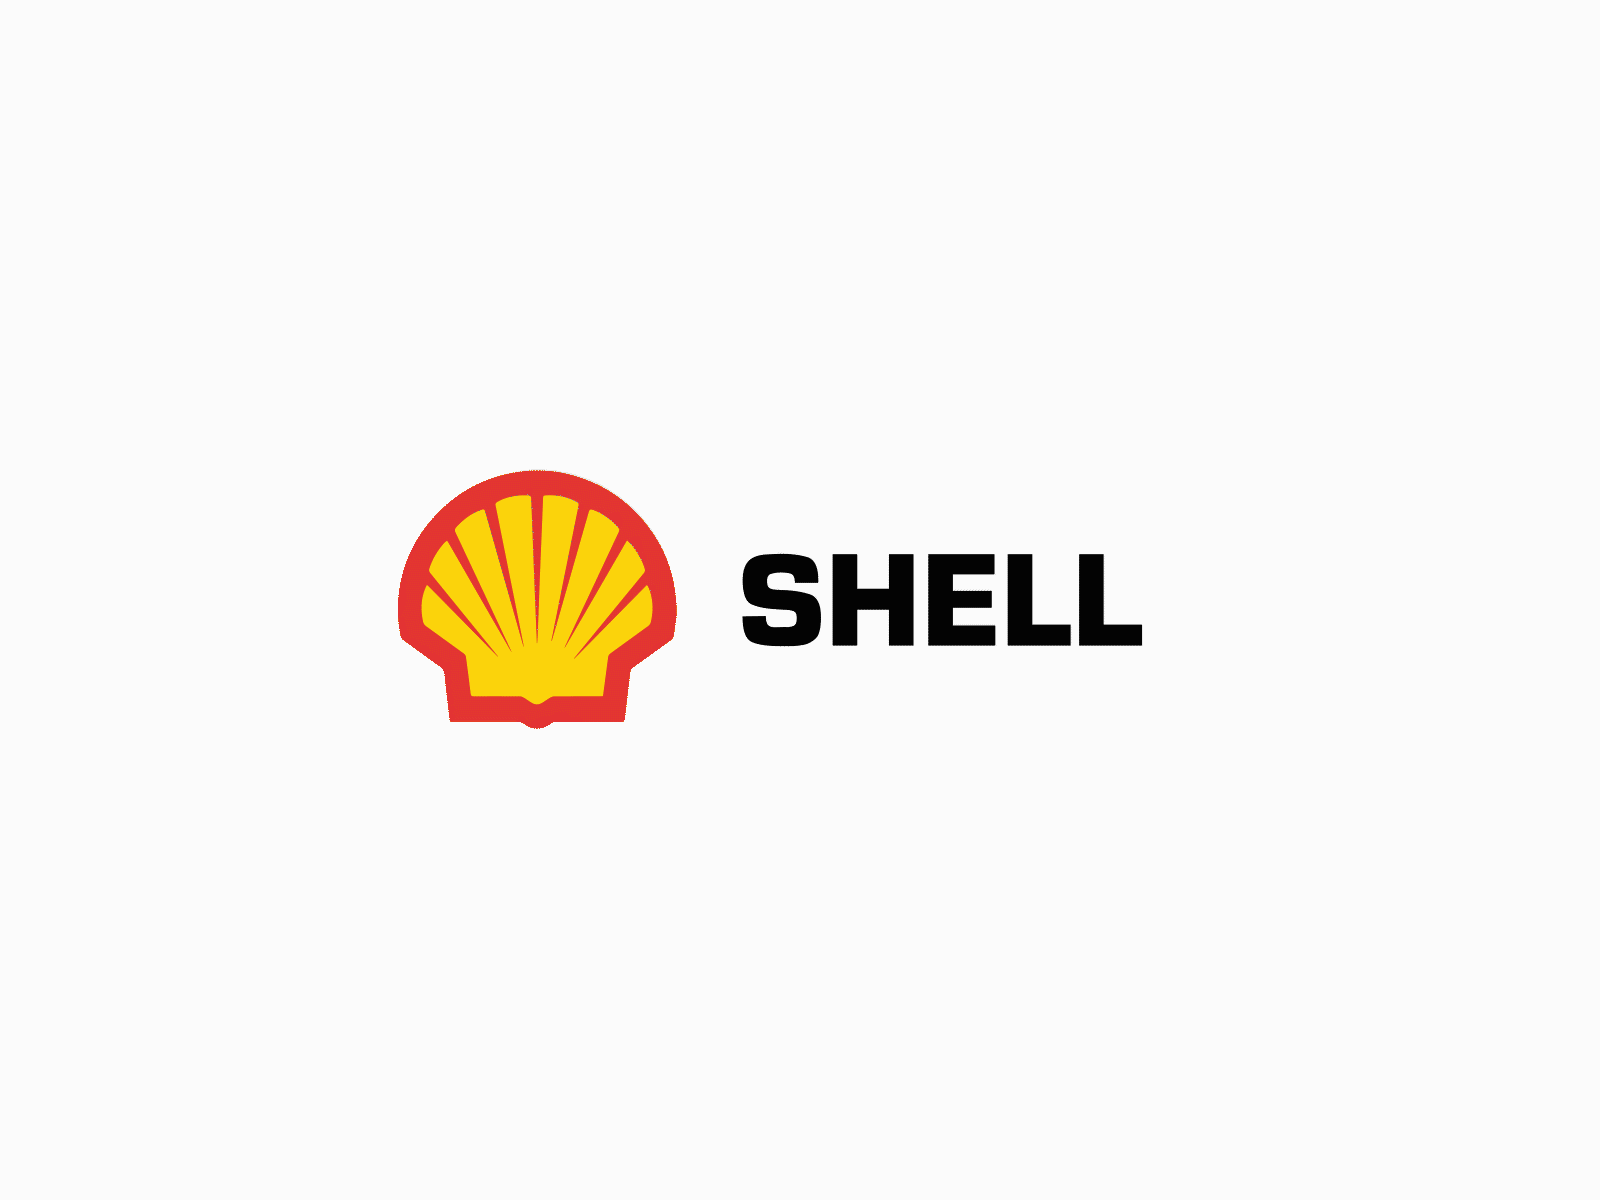 Shell Logo Animated by Abdellatif El Mahmoudy on Dribbble